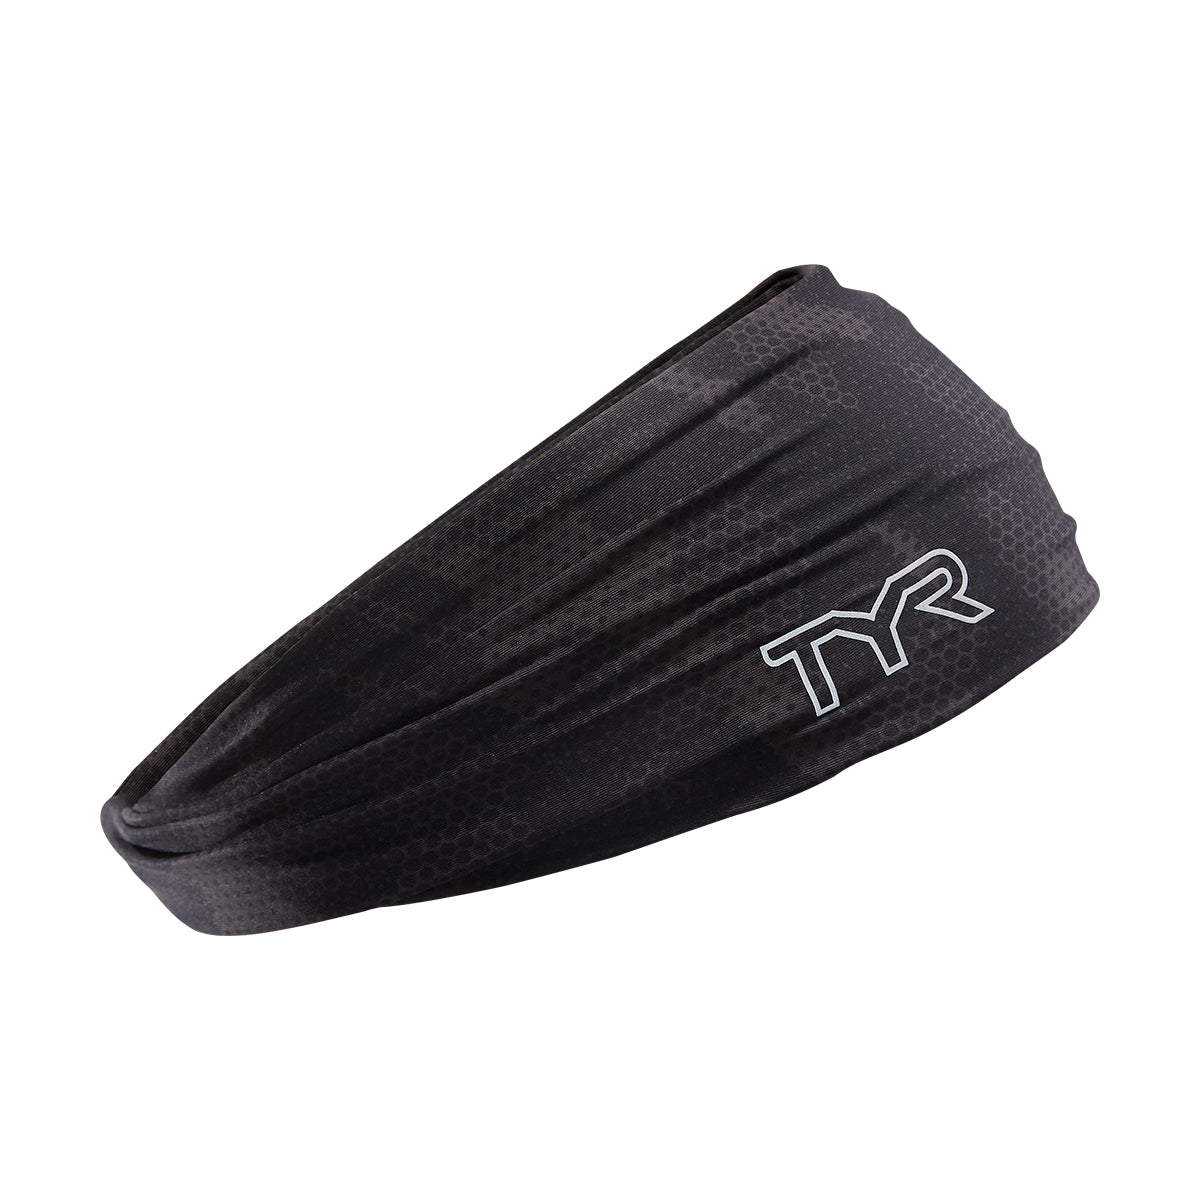 TYR headband in black